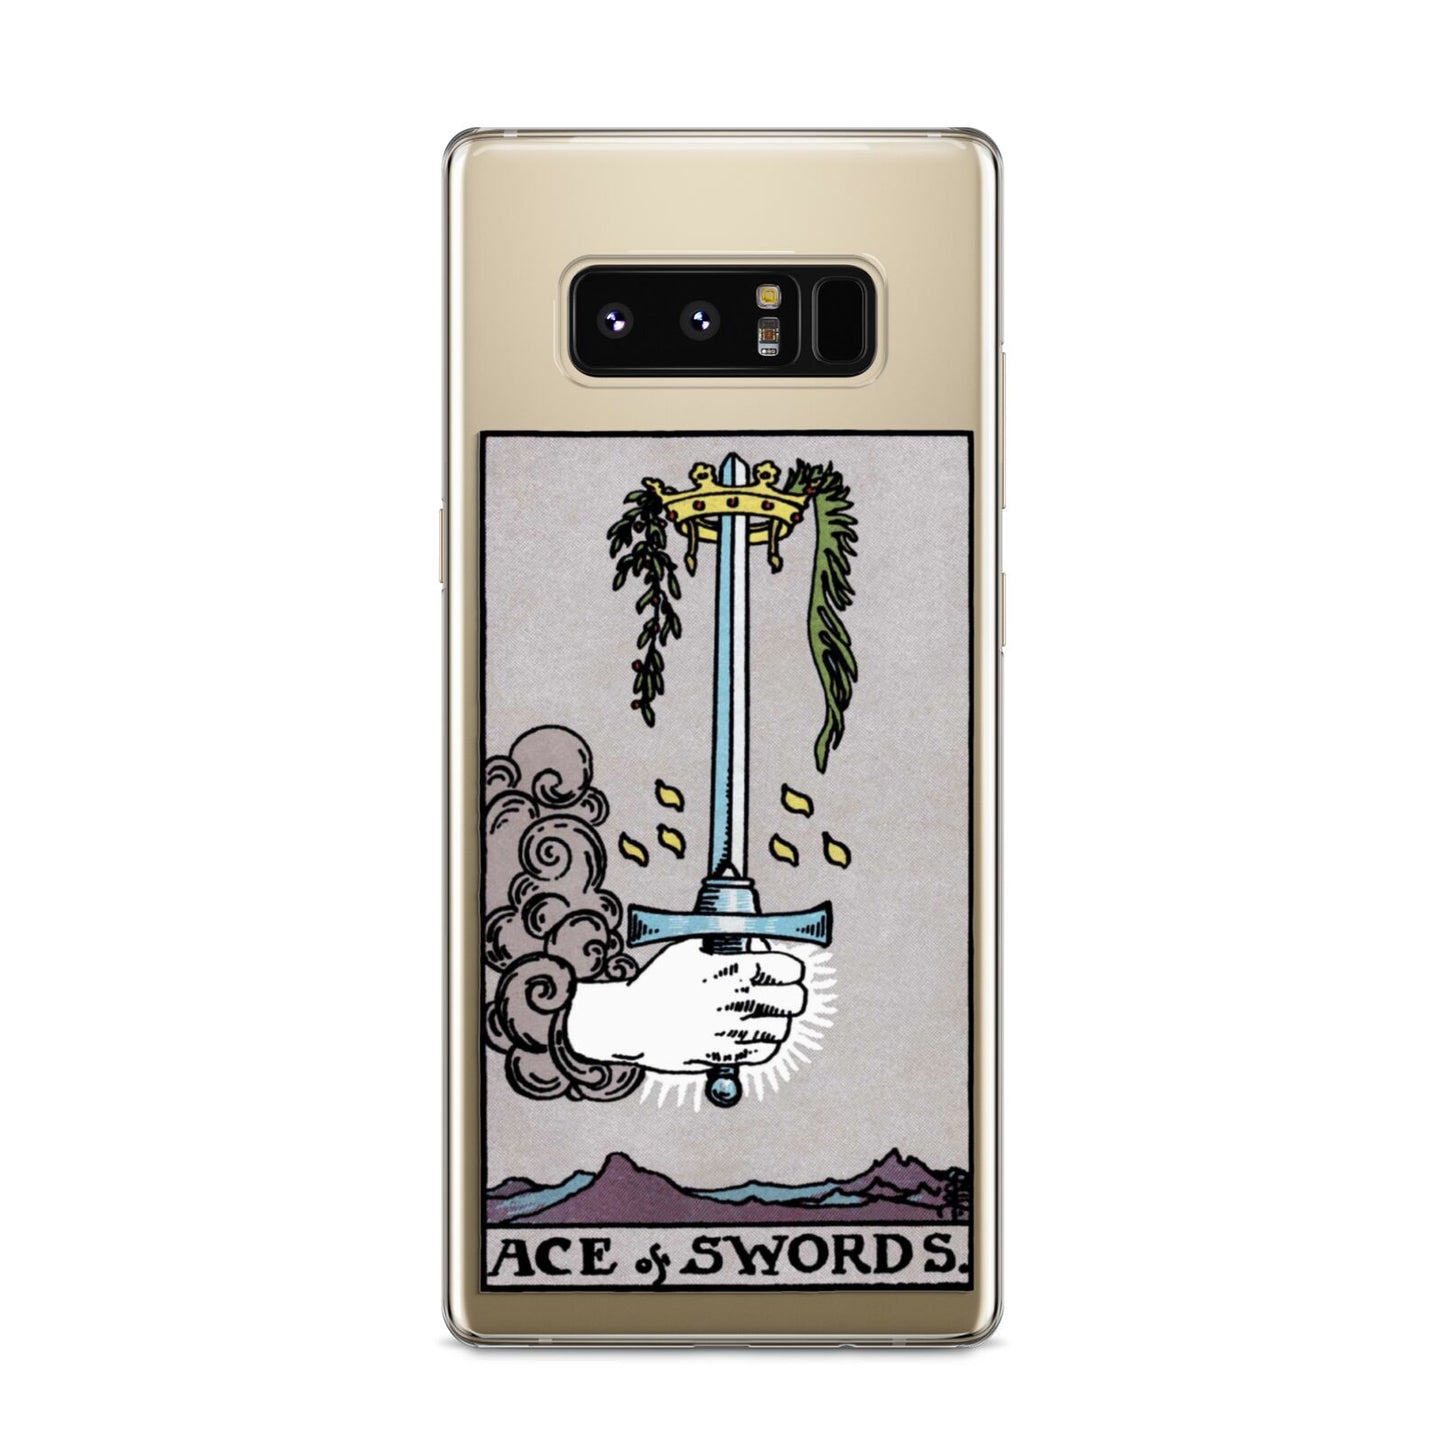 Ace of Swords Tarot Card Samsung Galaxy S8 Case